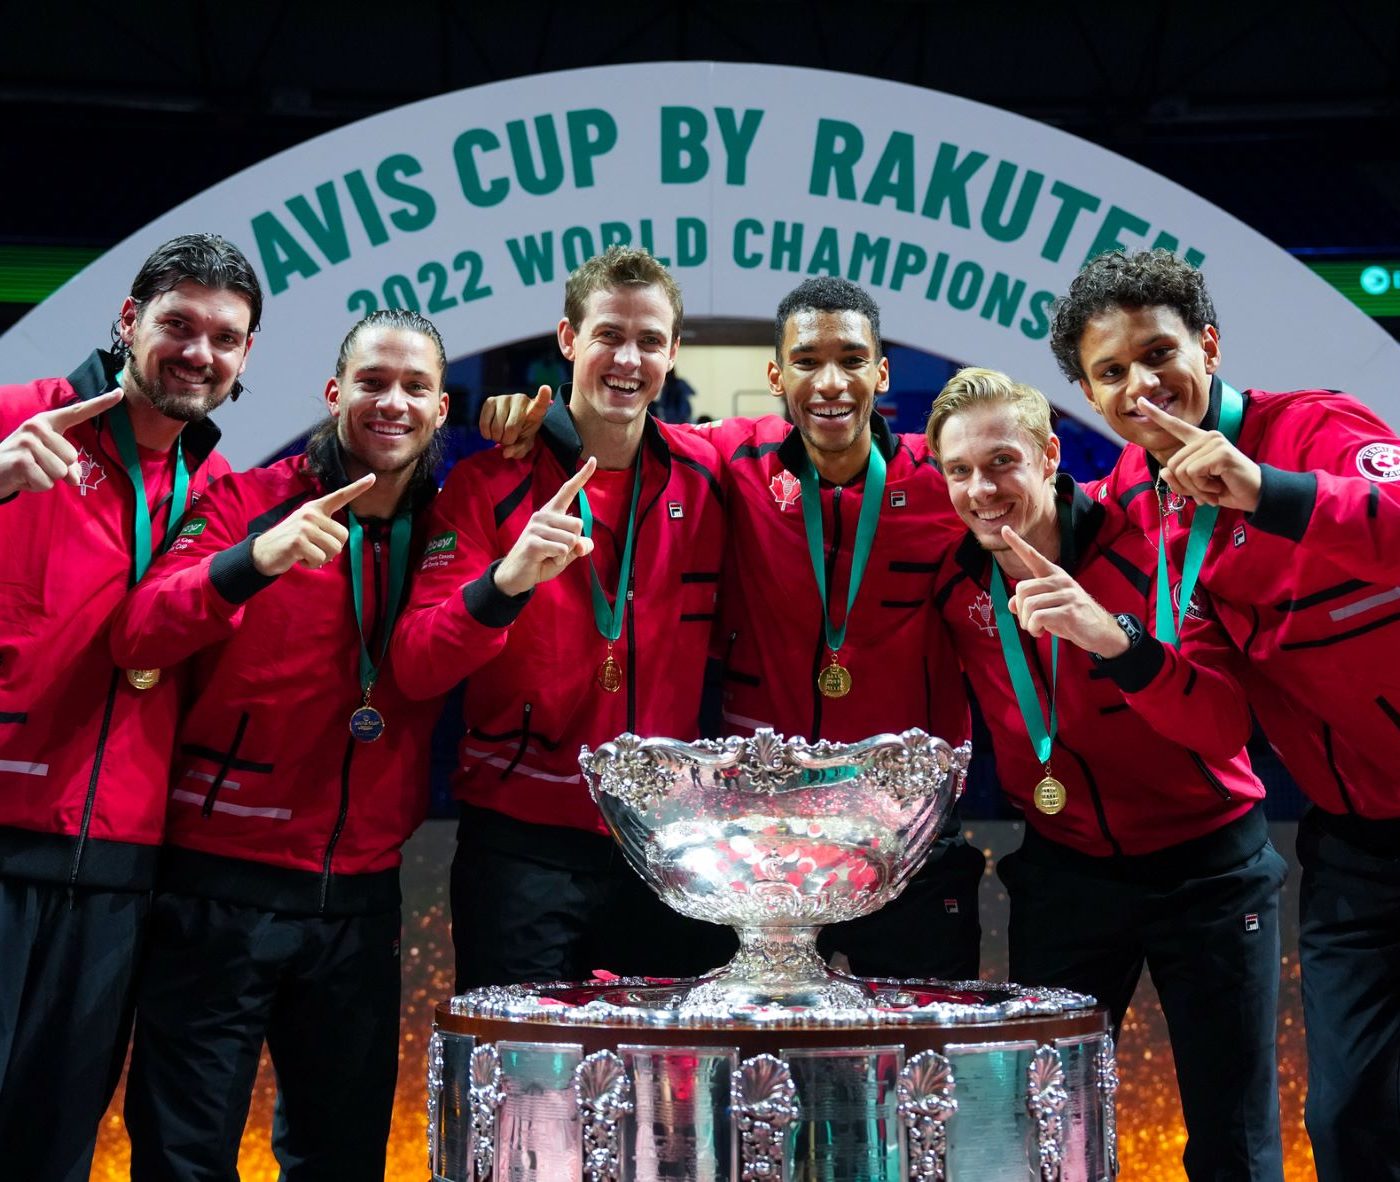 Frank Dancevic, Alexis Galarneau, Vasek Pospisil, Felix Auger-Aliassime, Denis Shapovalov, and Gabriel Diallo stand behind the Davis Cup trophy.